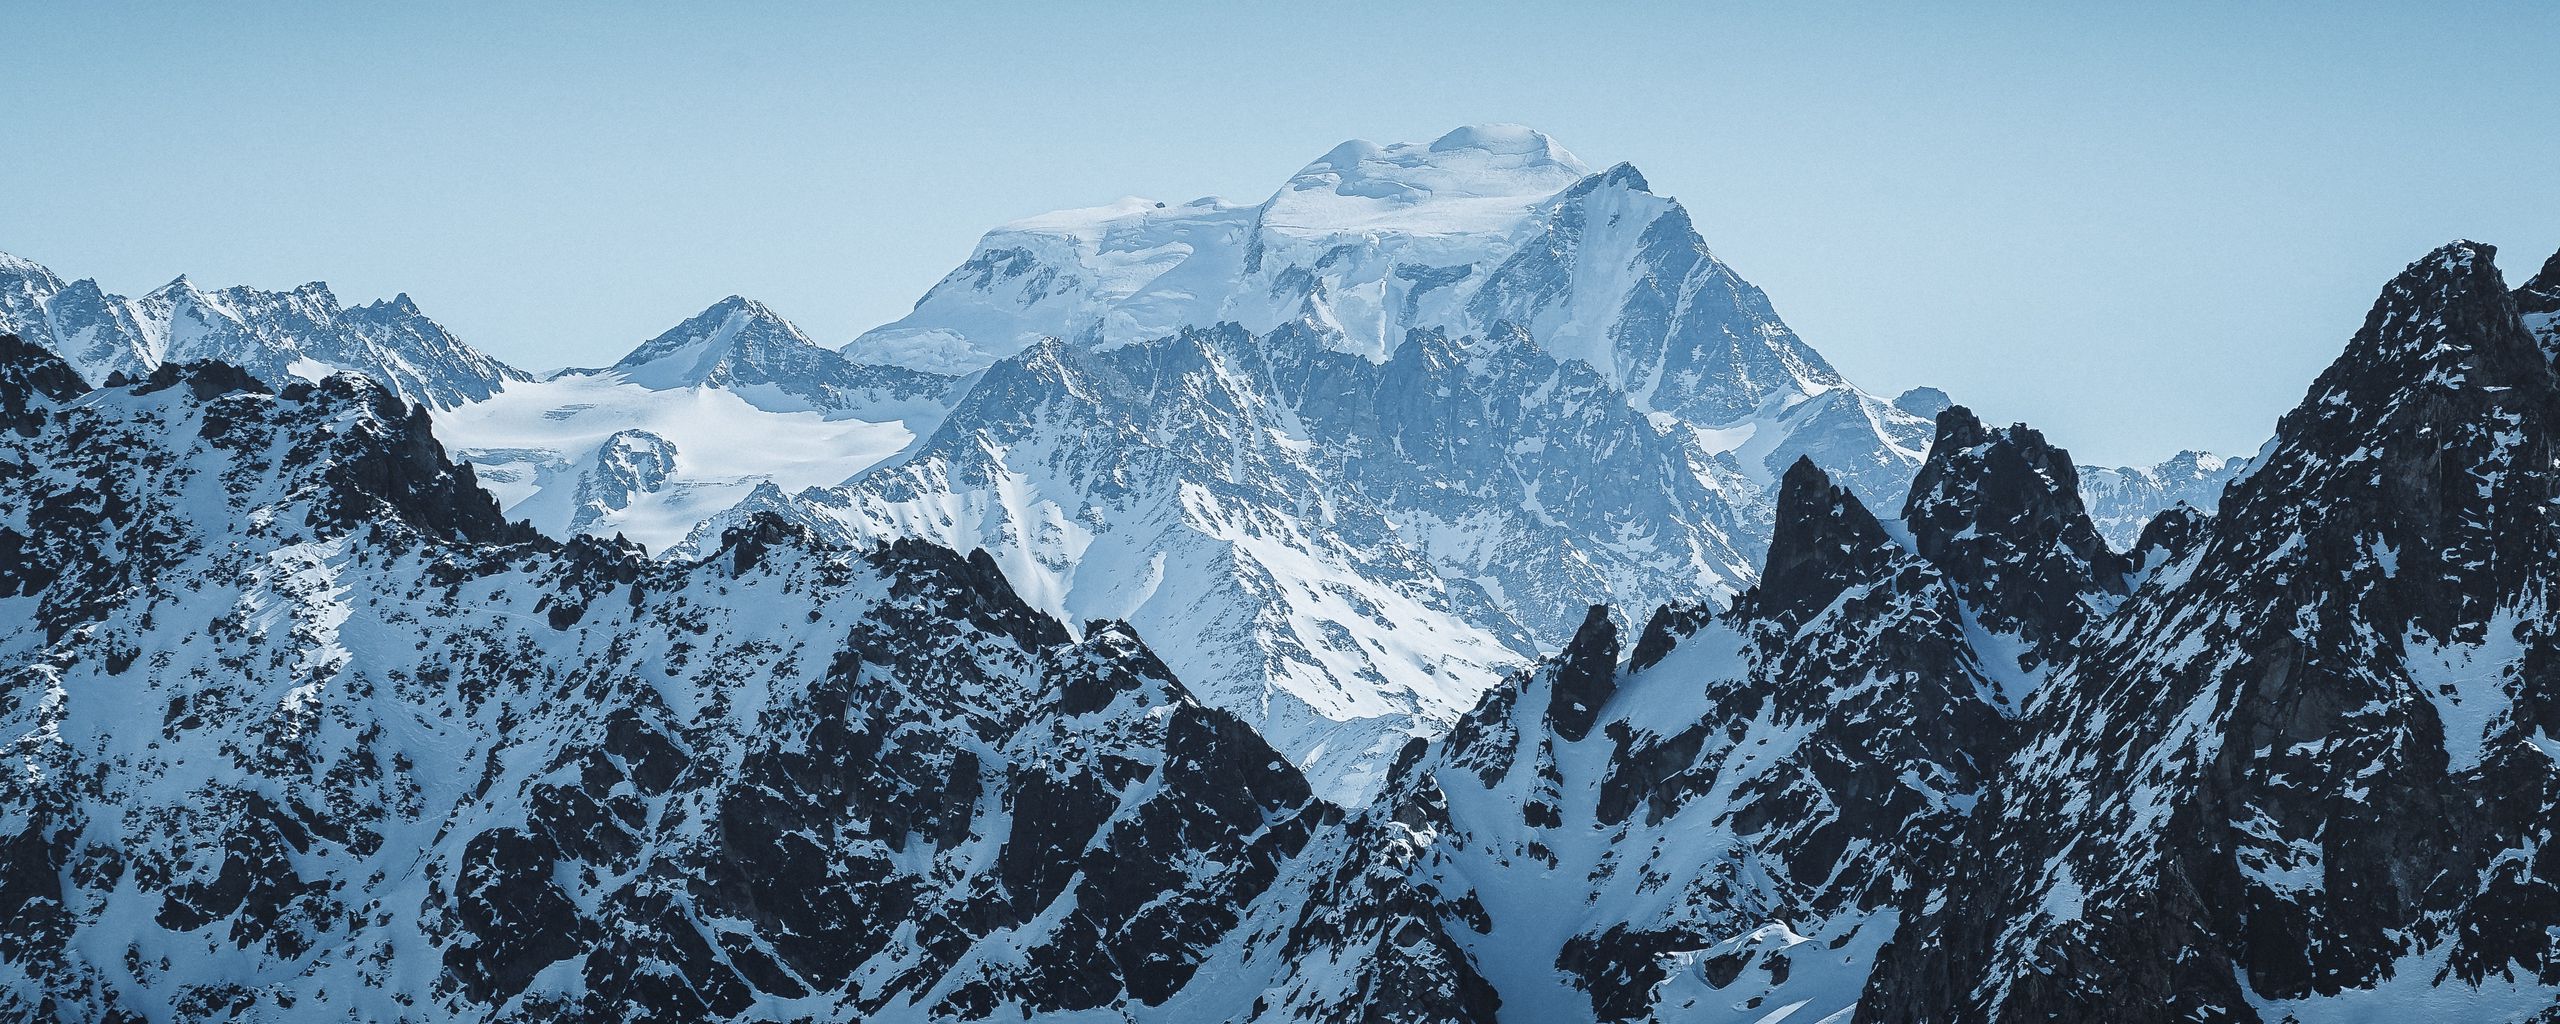 Download wallpaper 2560x1024 mountains, peak, alps, snowy, mountain range ultrawide monitor HD background